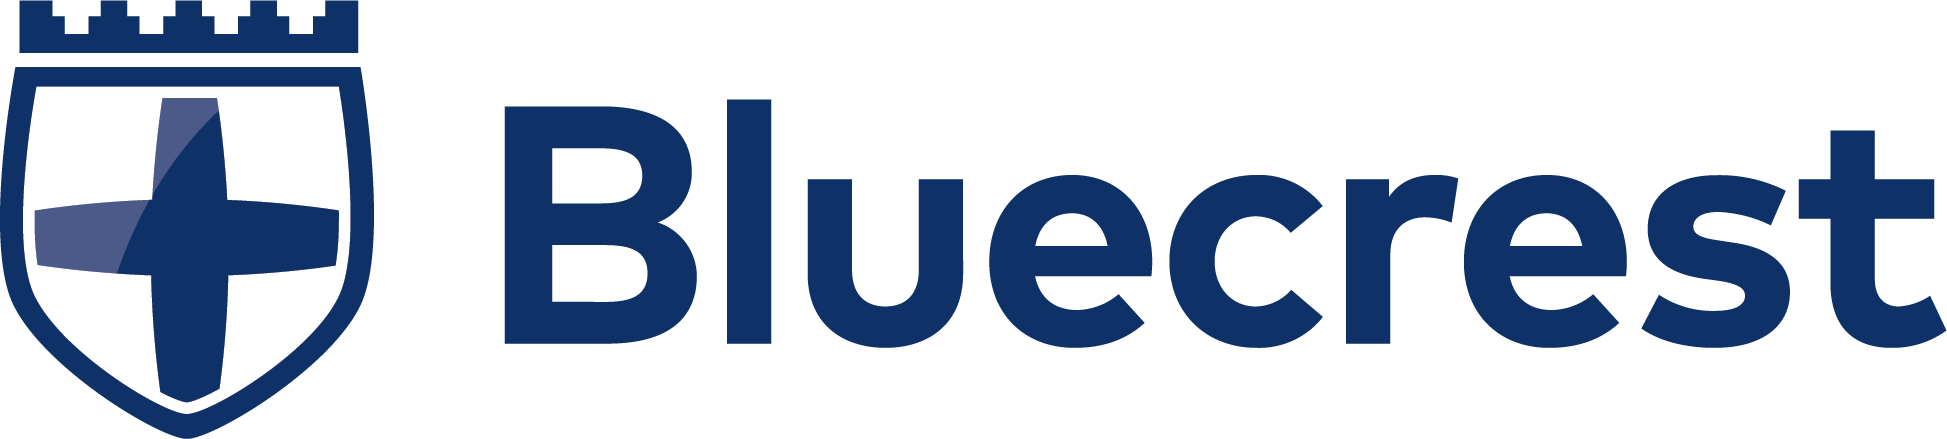 Bluecrest Wellness logo